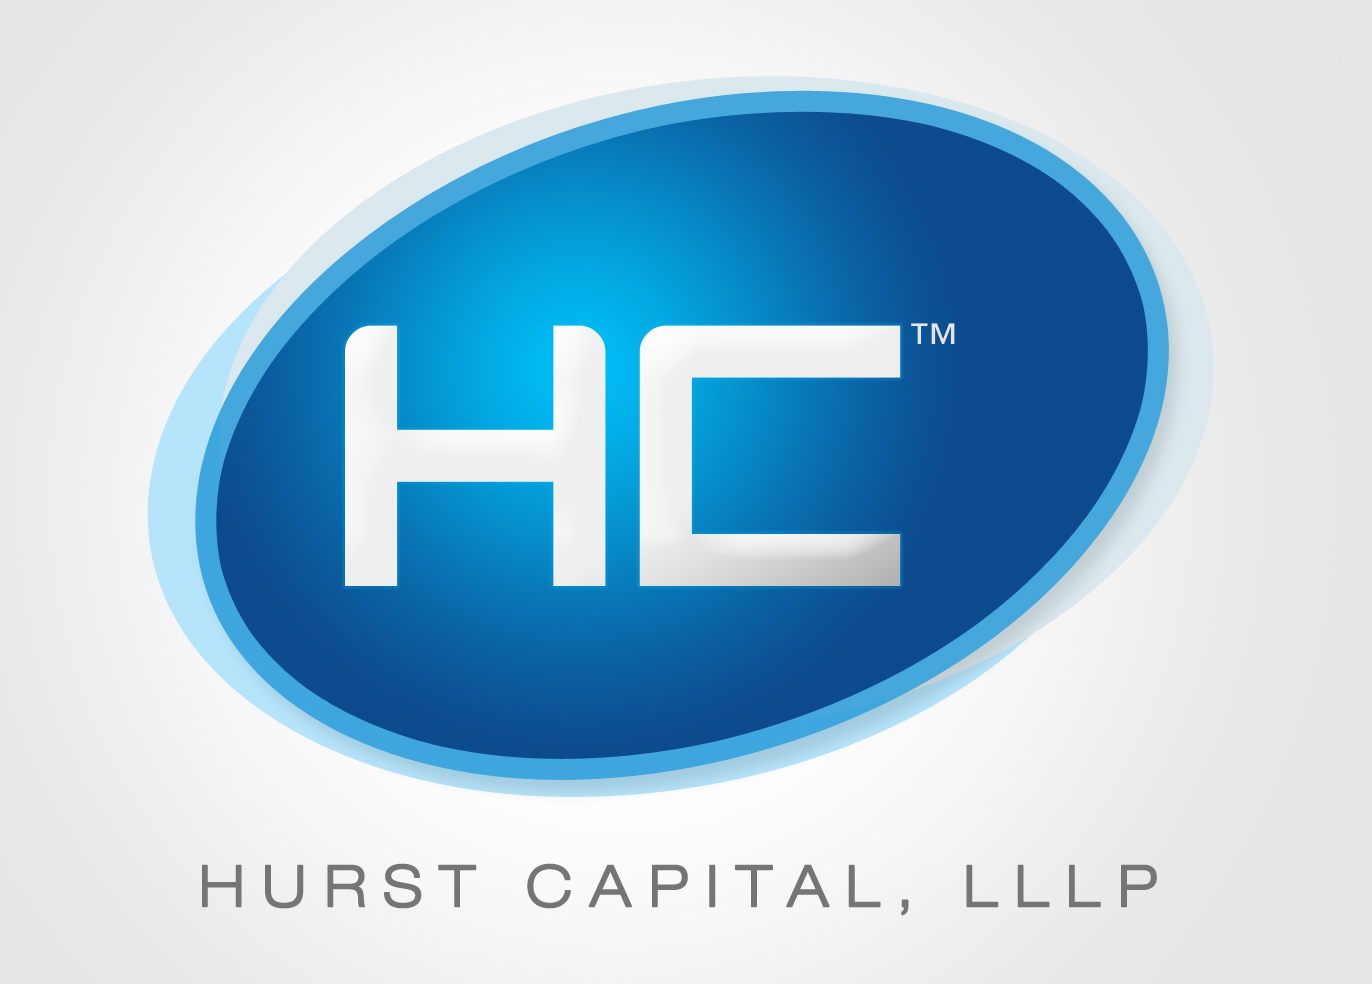 Hurst Capital LLLP company logo